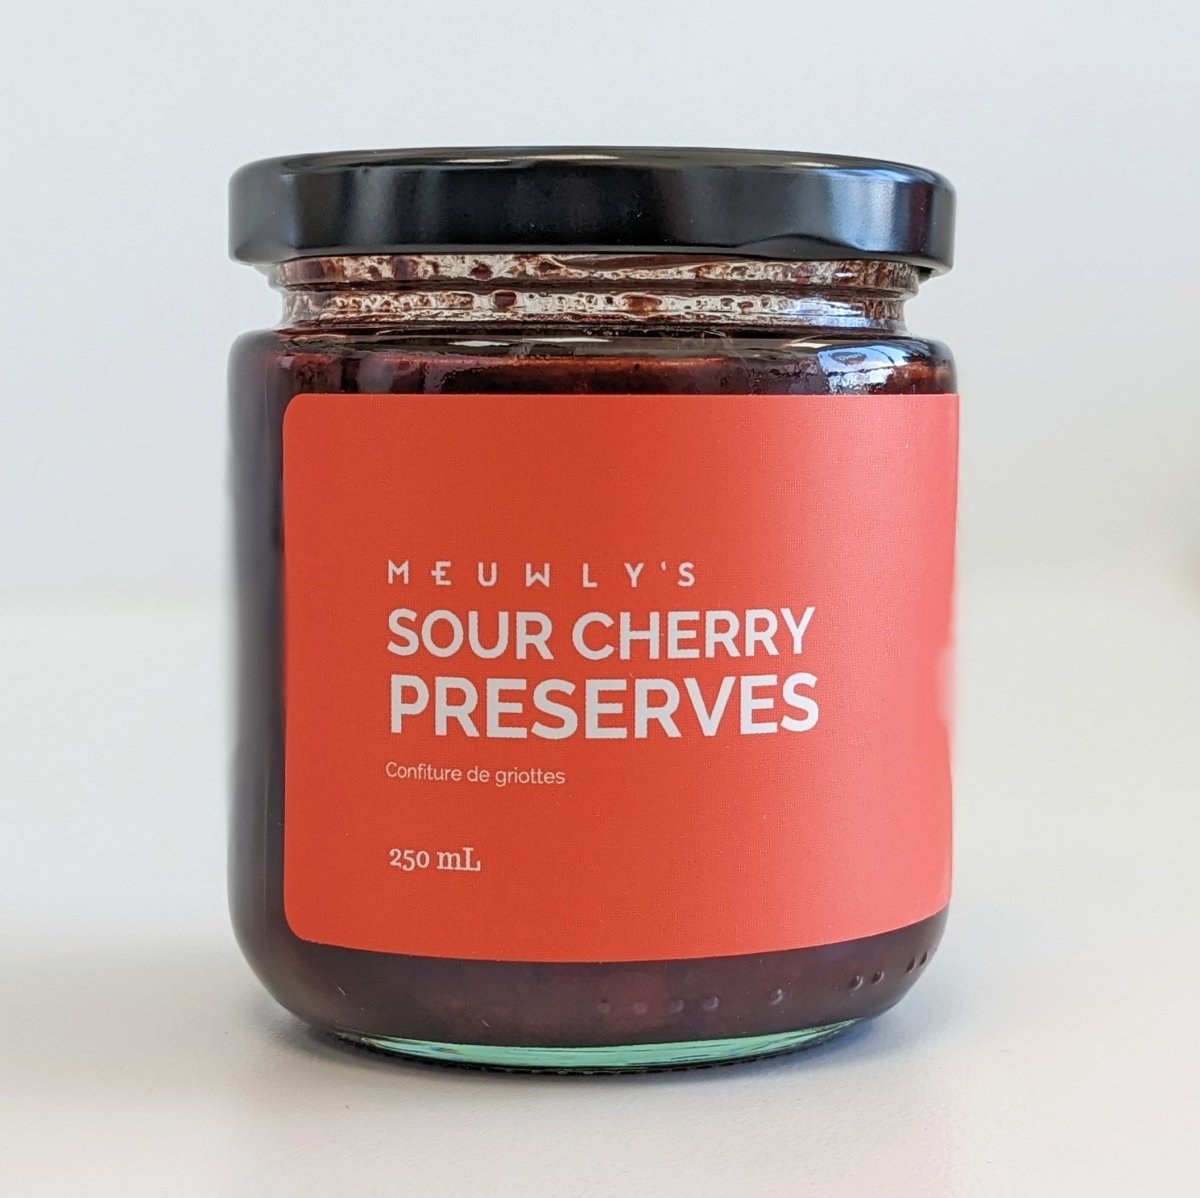 Sour Cherry Preserves - 250mL - Oonnie - Meuwly's